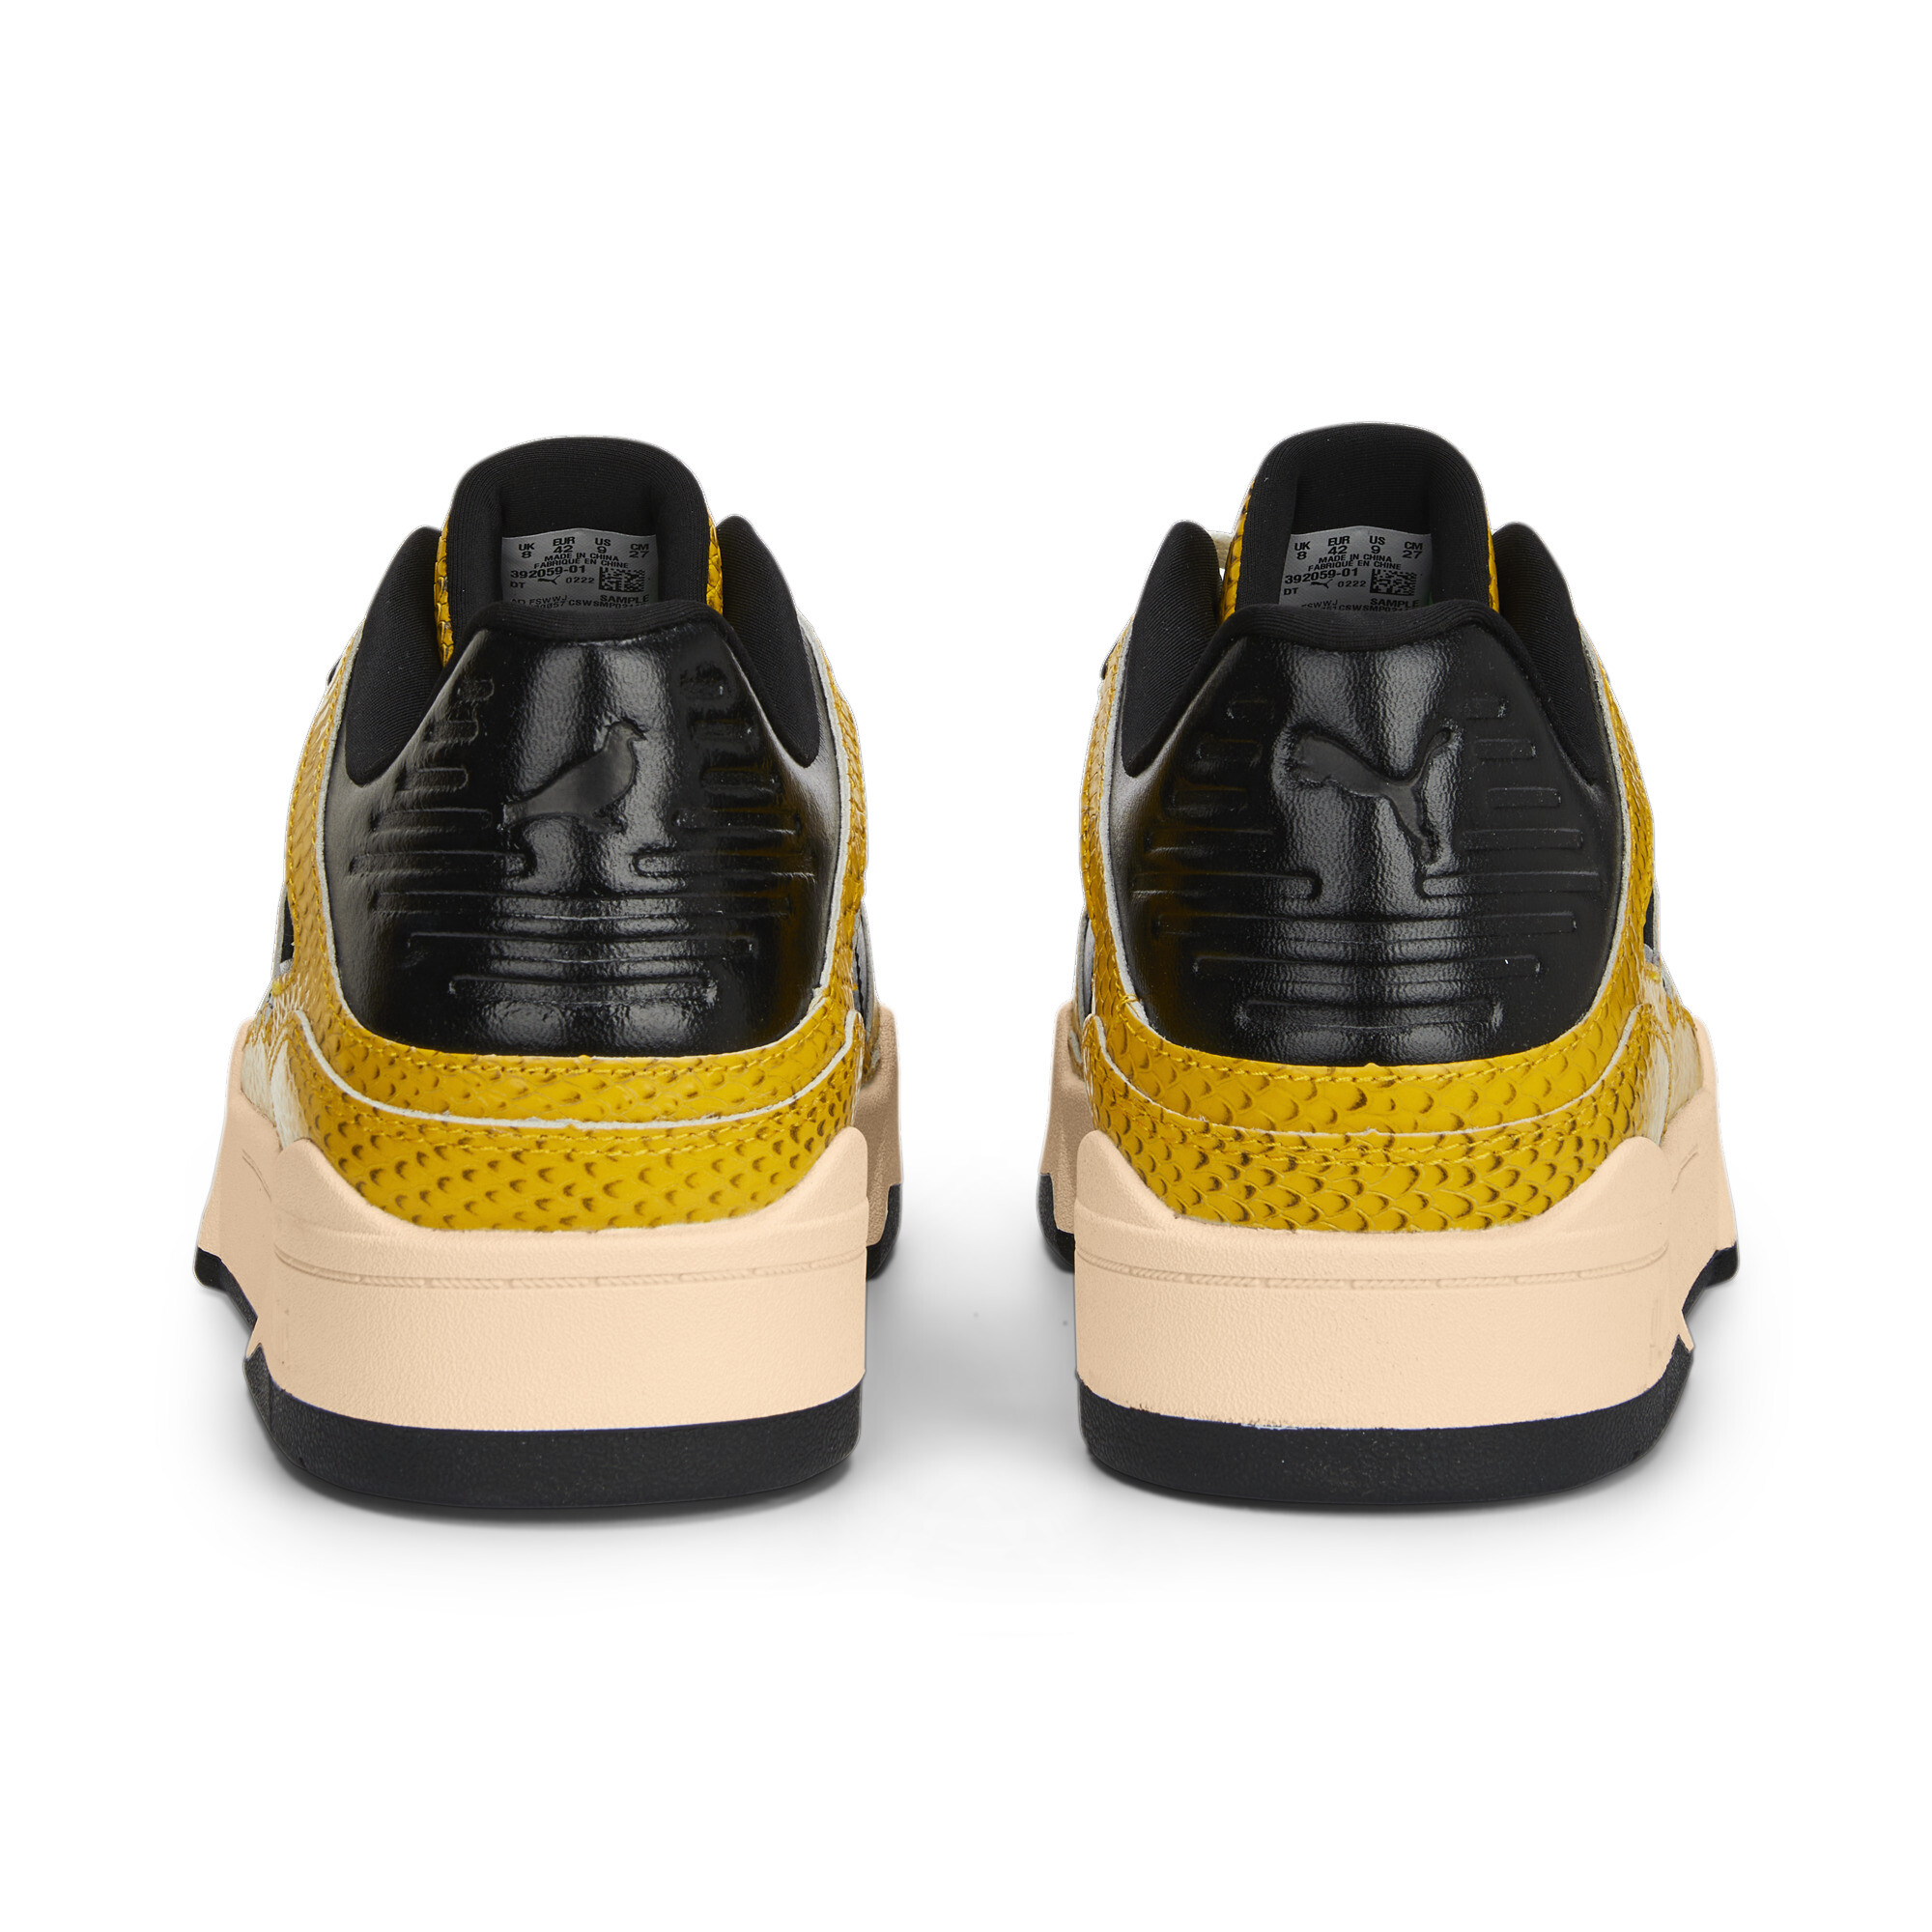 Men's PUMA X STAPLE Slipstream T Sneakers In Yellow, Size EU 42.5